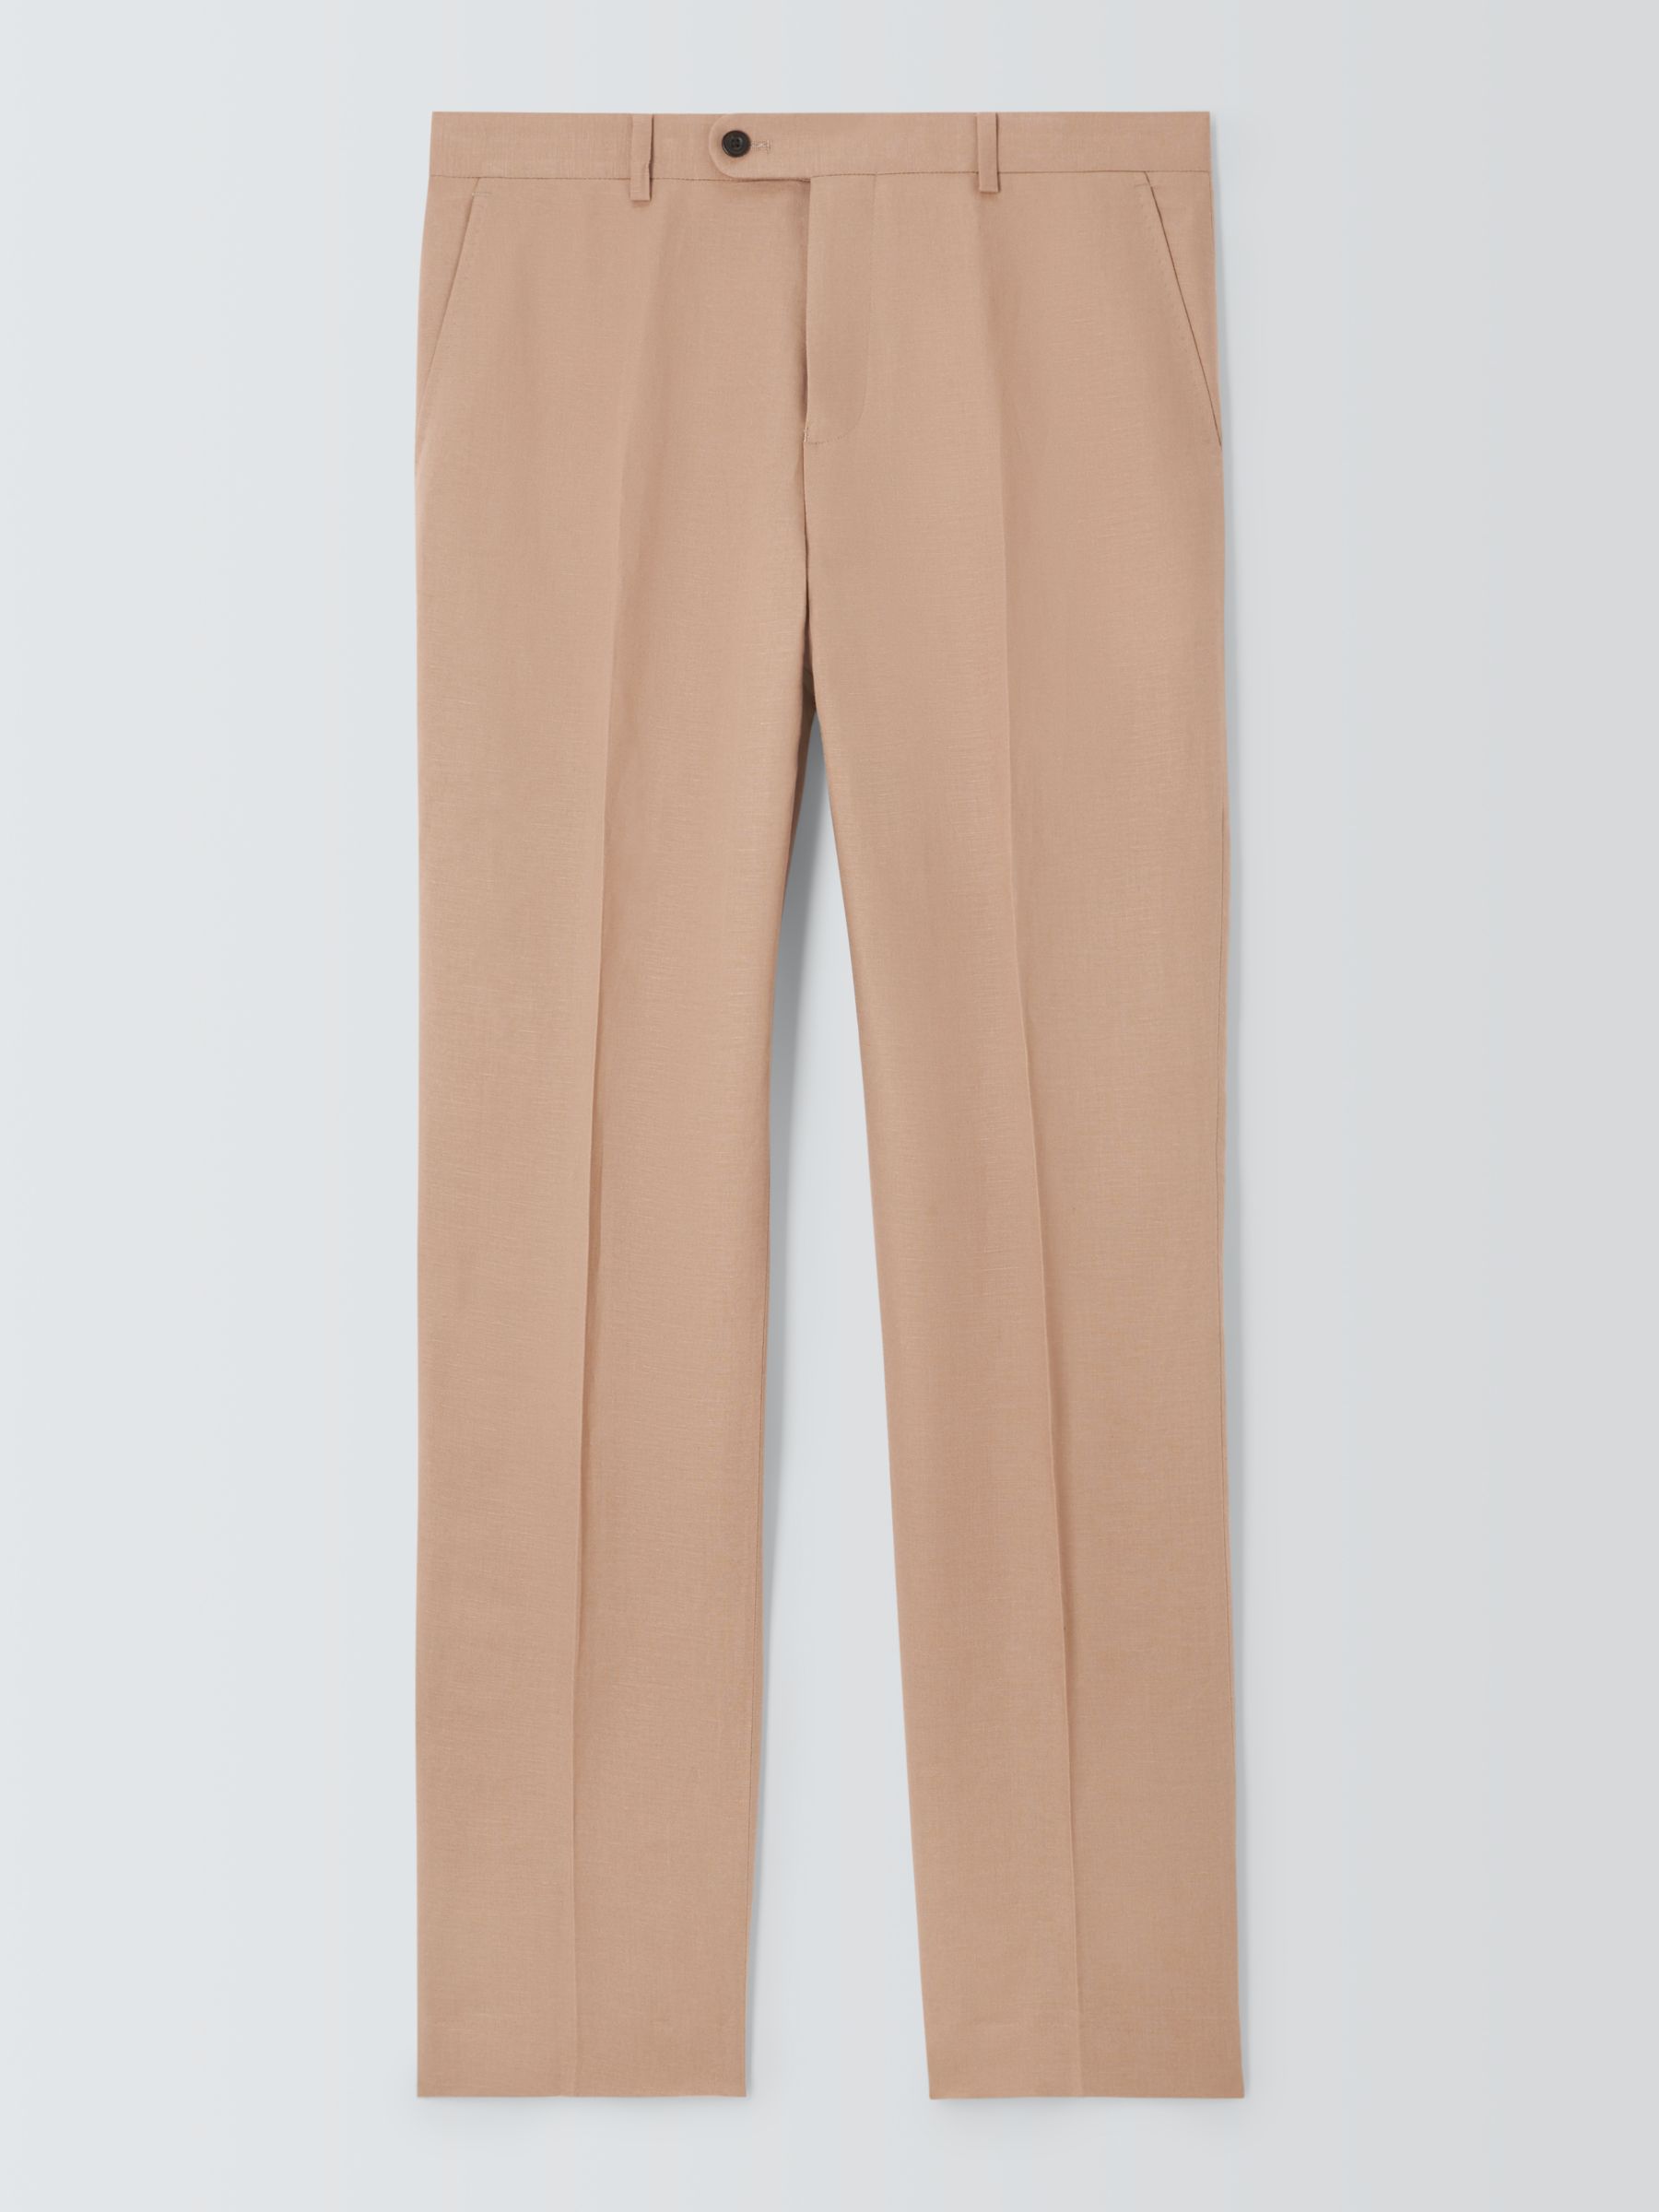 John Lewis Ashwell Linen Blend Regular Fit Suit Trousers, Sand, 38R